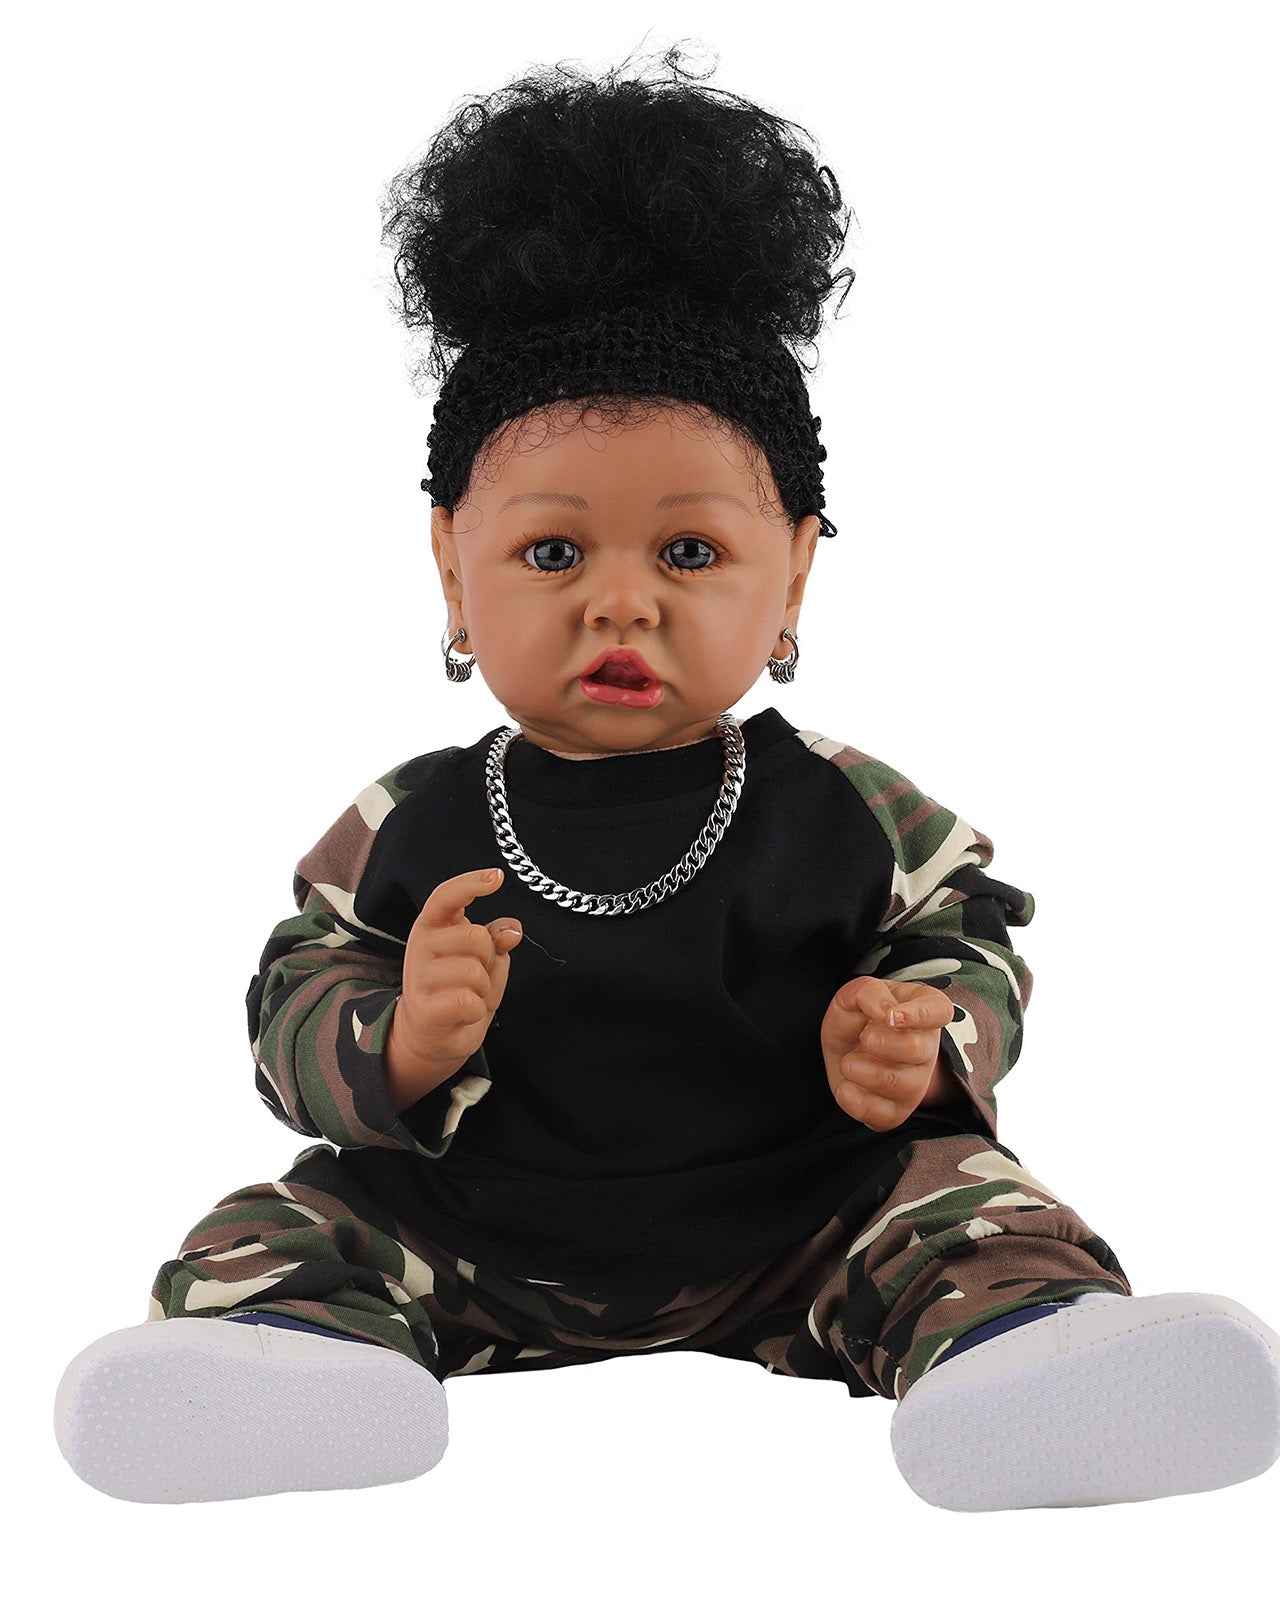 Presley - 20" Reborn Baby Dolls African American Newborn Black Girl with Washable Full Silicone Vinyl Body